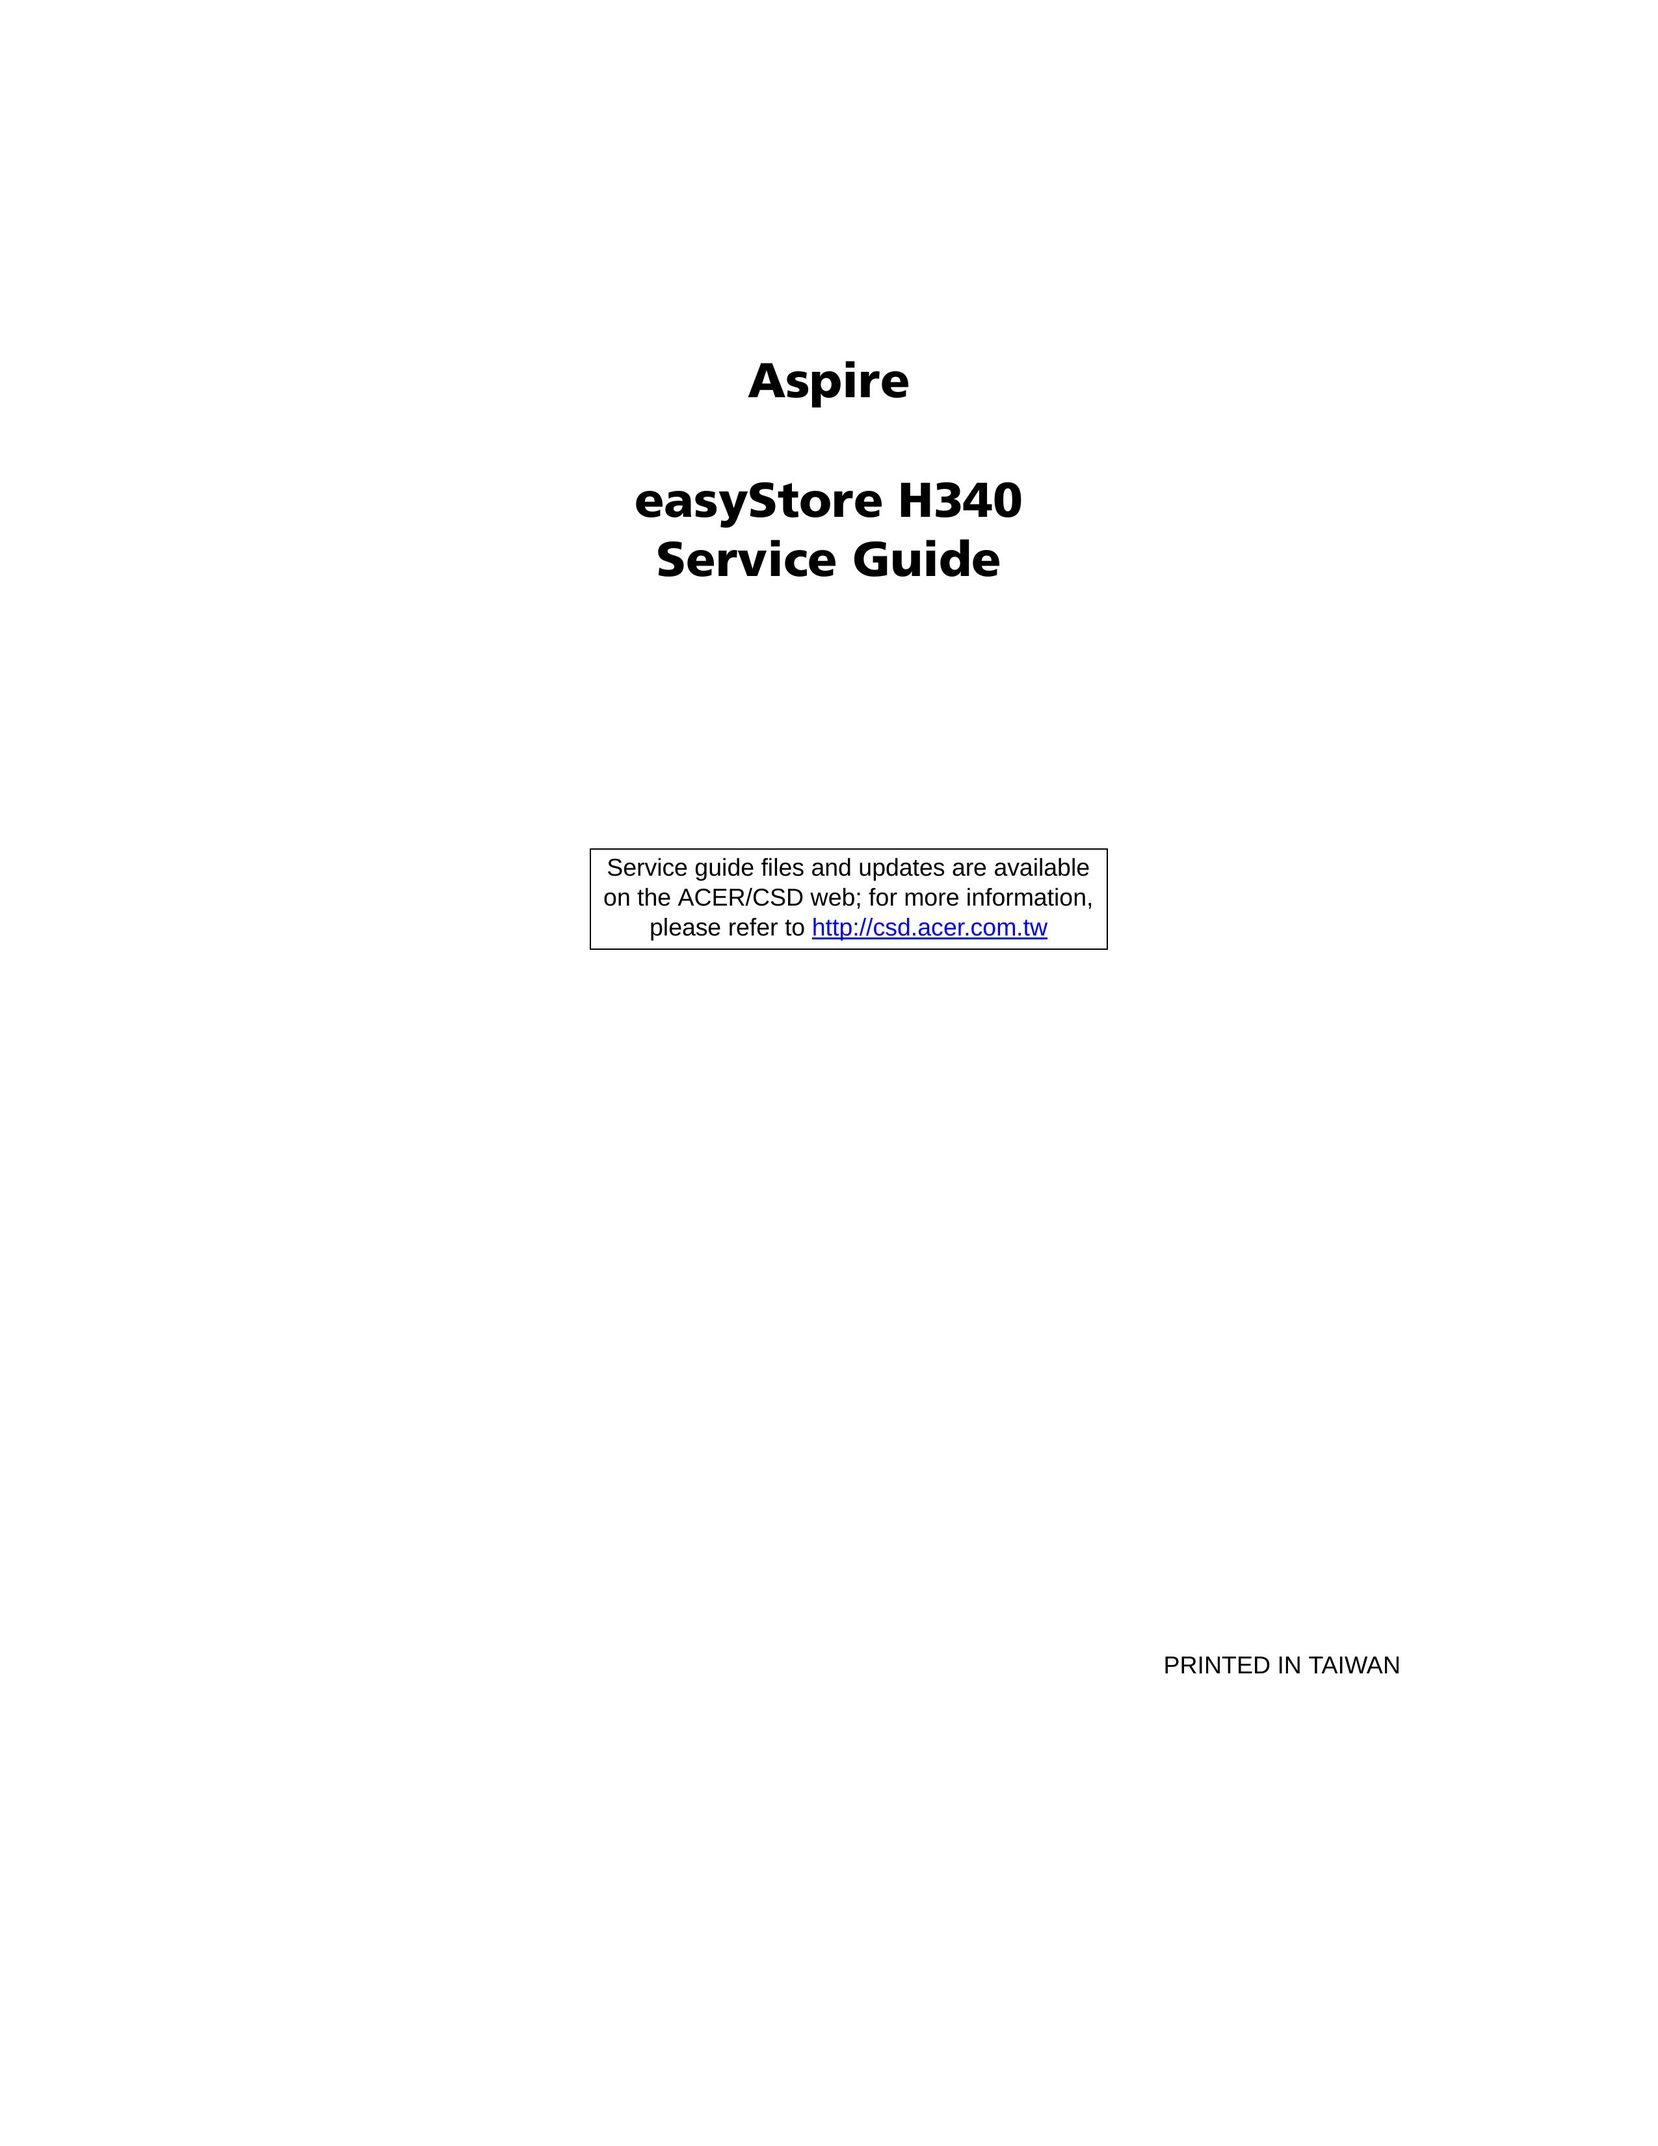 Aspire Digital GU341G0ALEPR6B2C6CE Can Opener User Manual